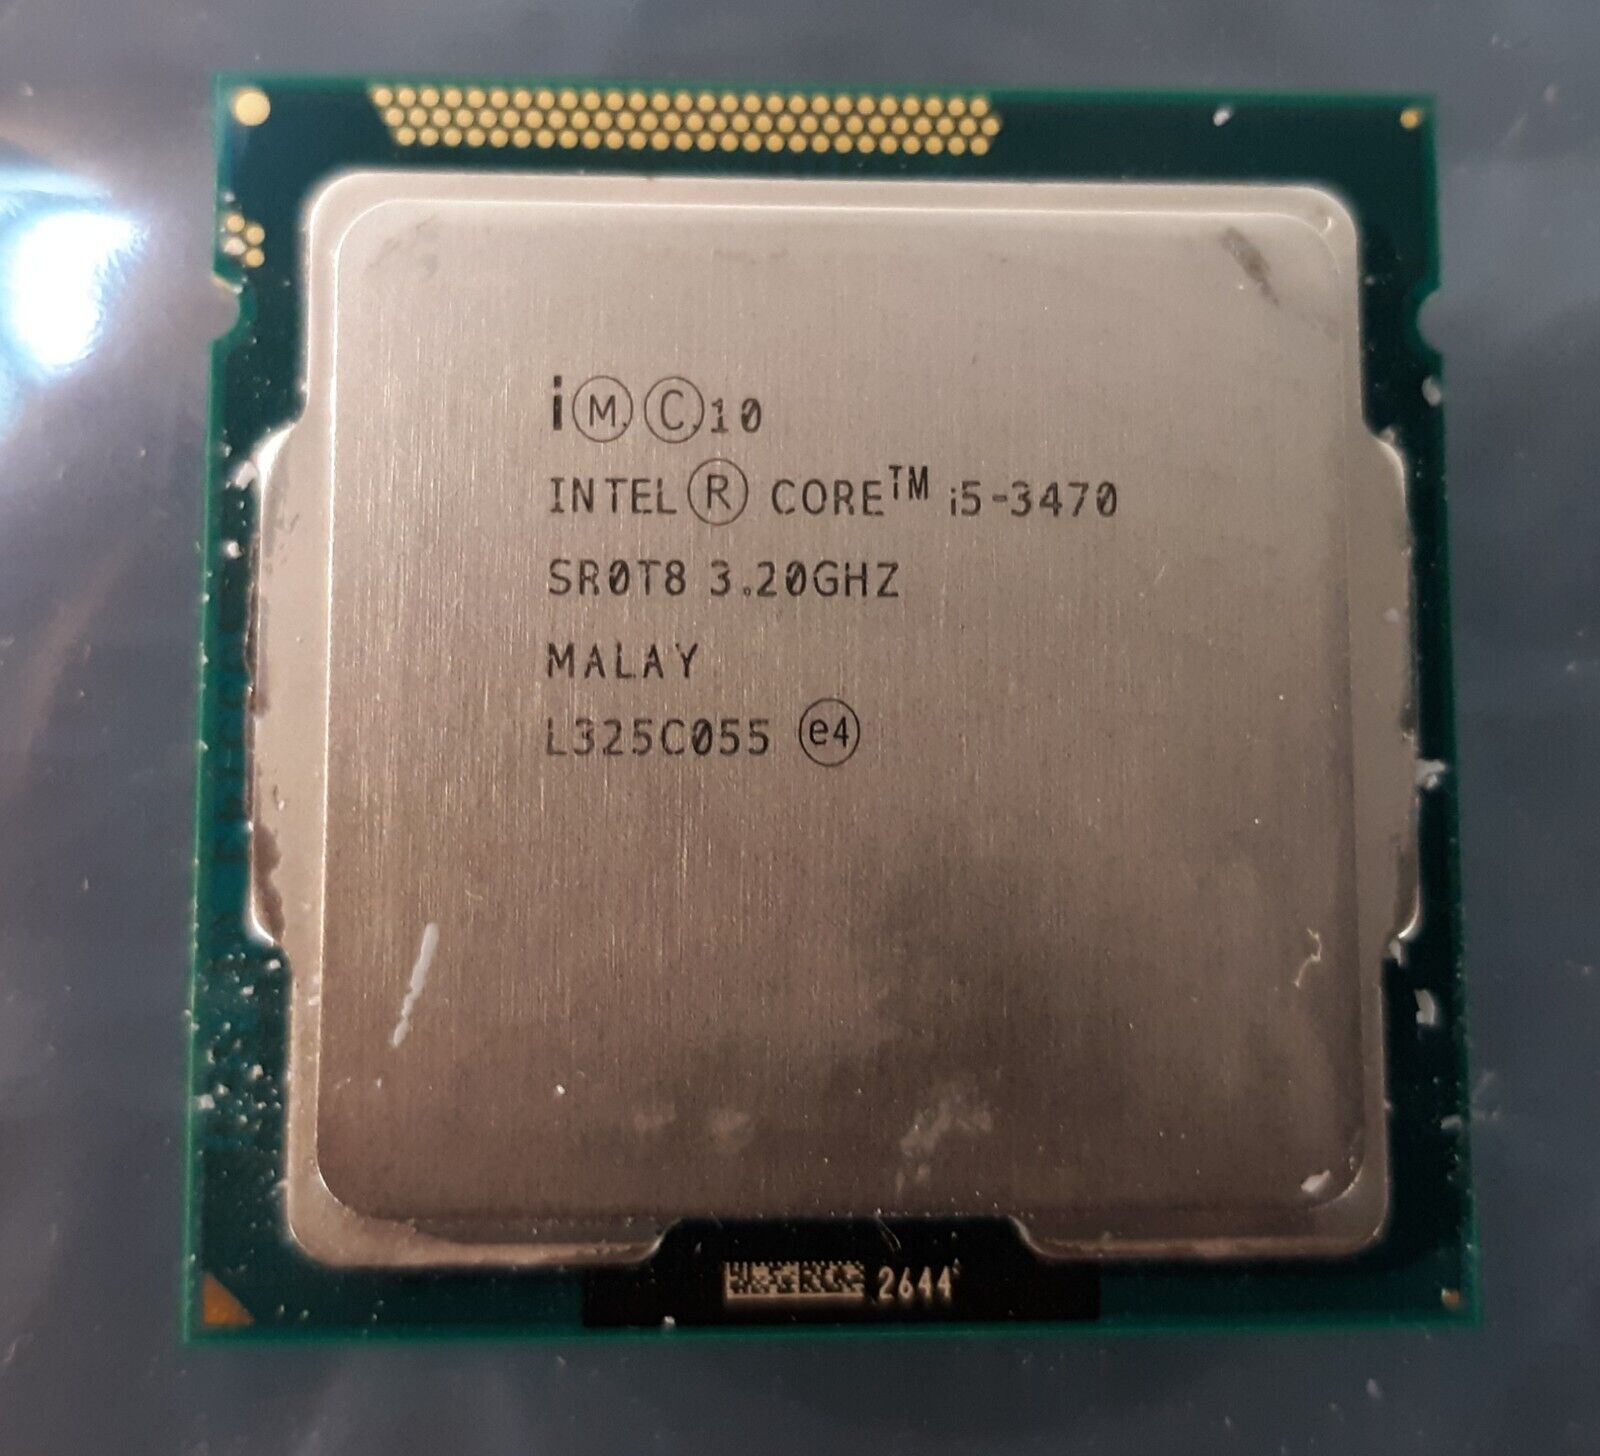 Intel Core i5-3470 SR0T8 3.20GHz CPU Processor *AS IS*